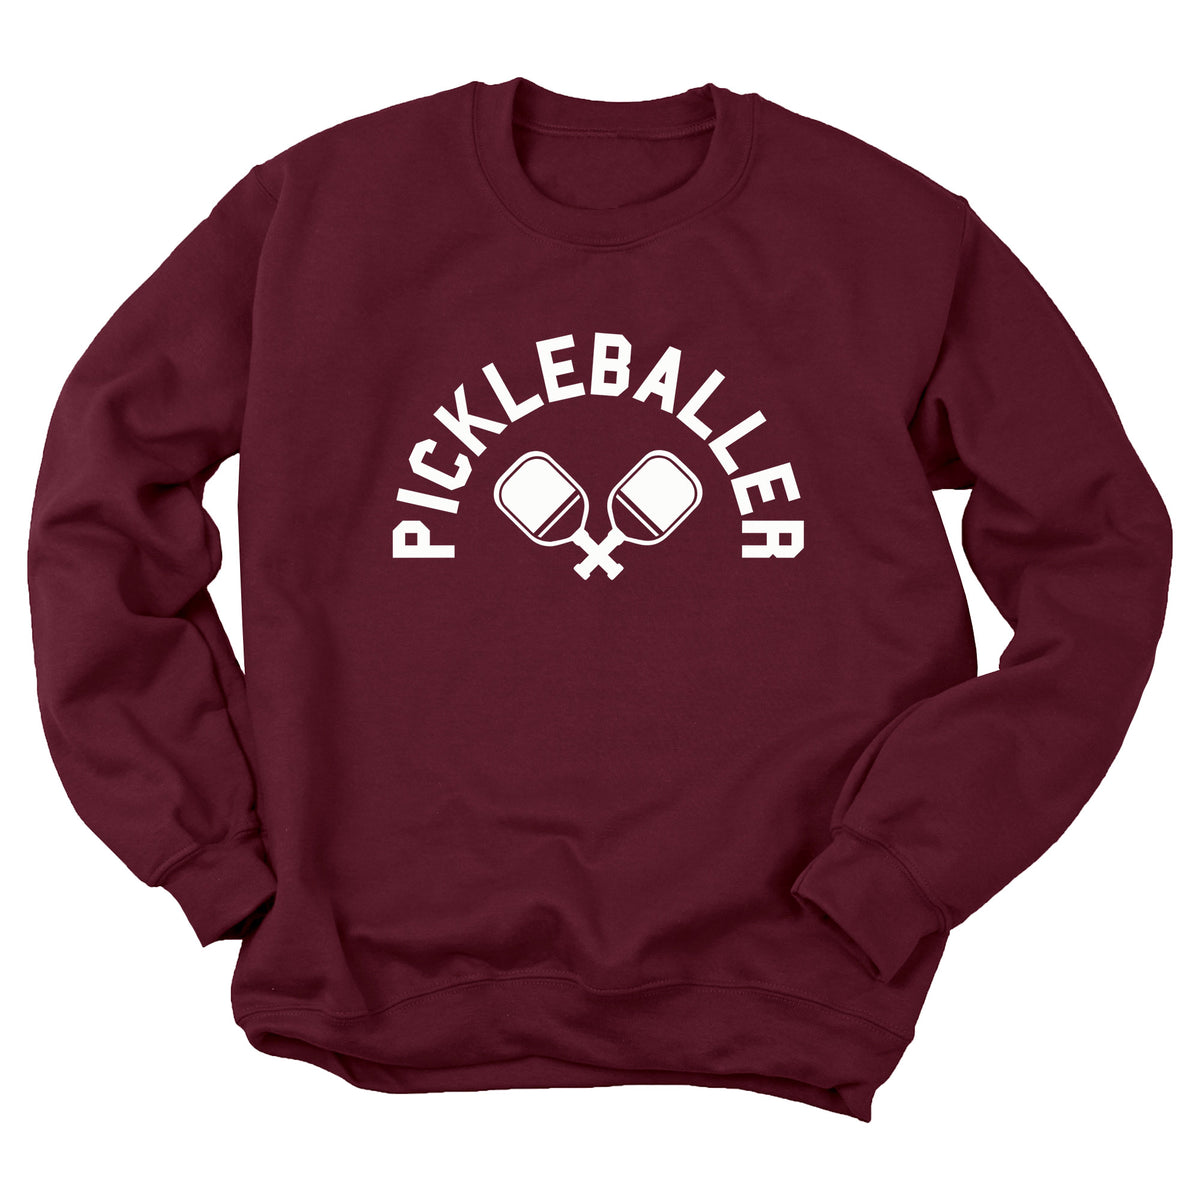 Pickleballer with Paddles Sweatshirt